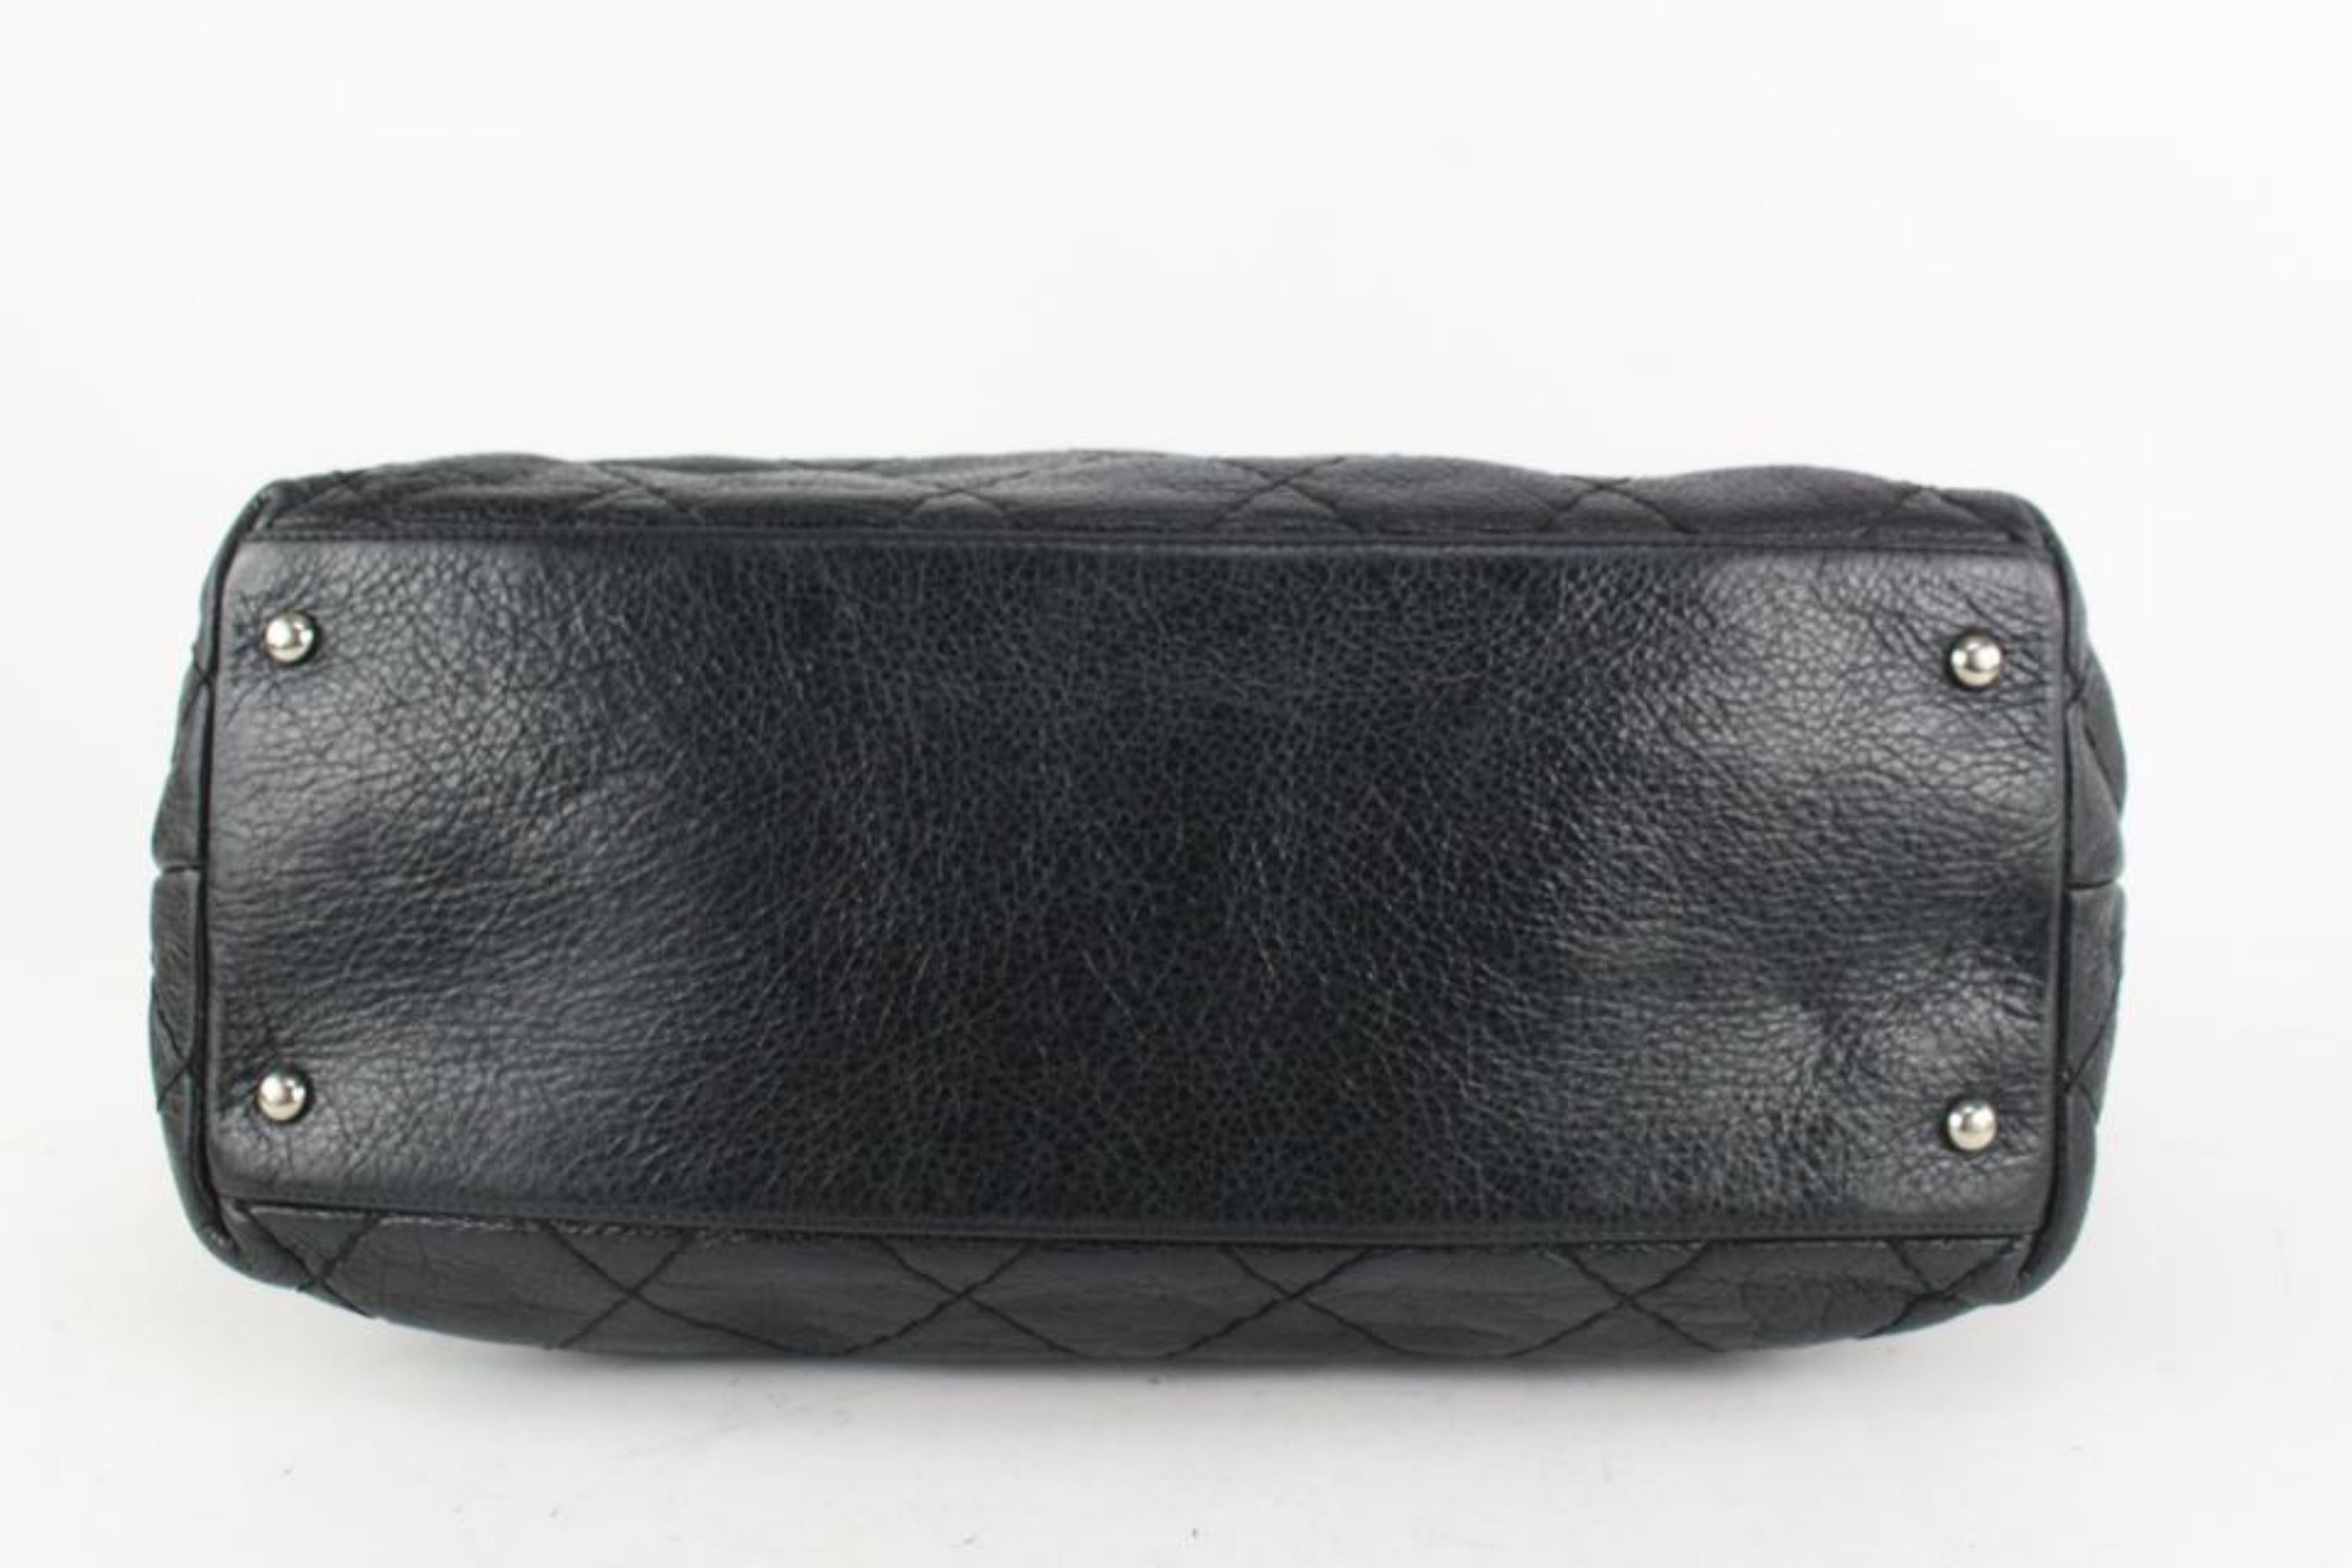 Chanel Black Soft Caviar On the Road Shopper Tote Bag 118c35 2